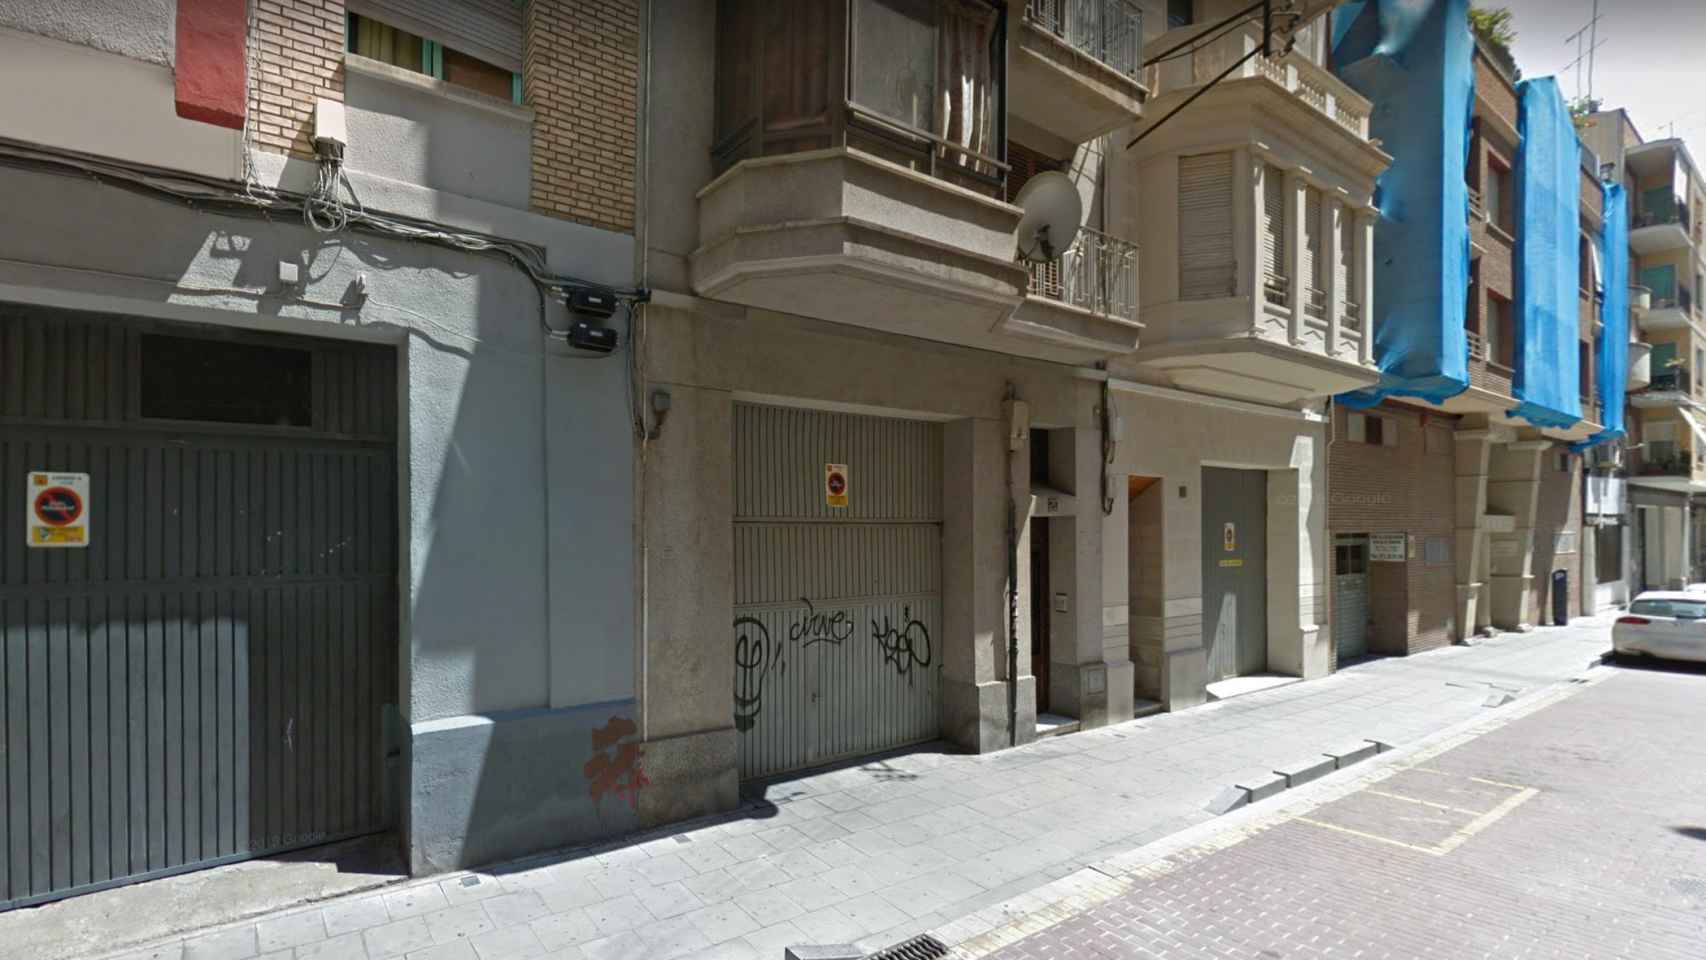 Calle Riu Éssera de Lleida, donde el detenido golpeó a su pareja embarazada / GOOGLE MAPS